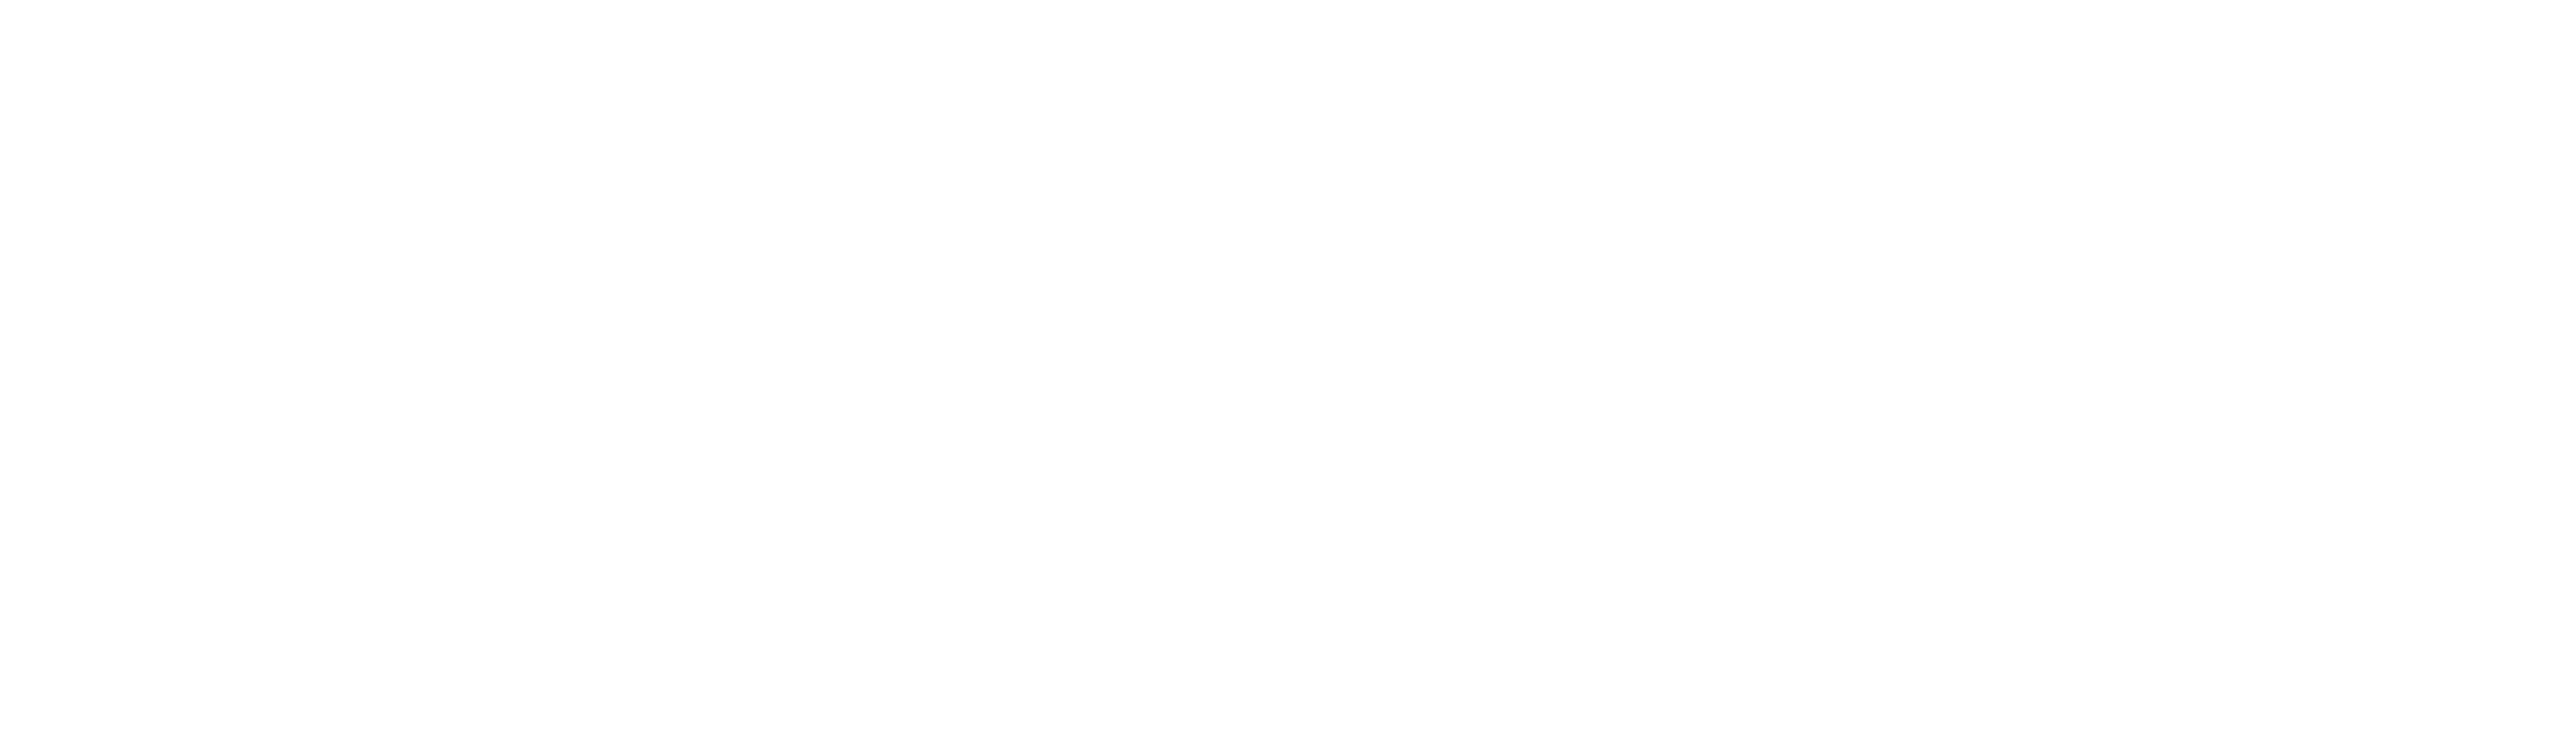 Crossroads Estate Liquidation Services, LLC